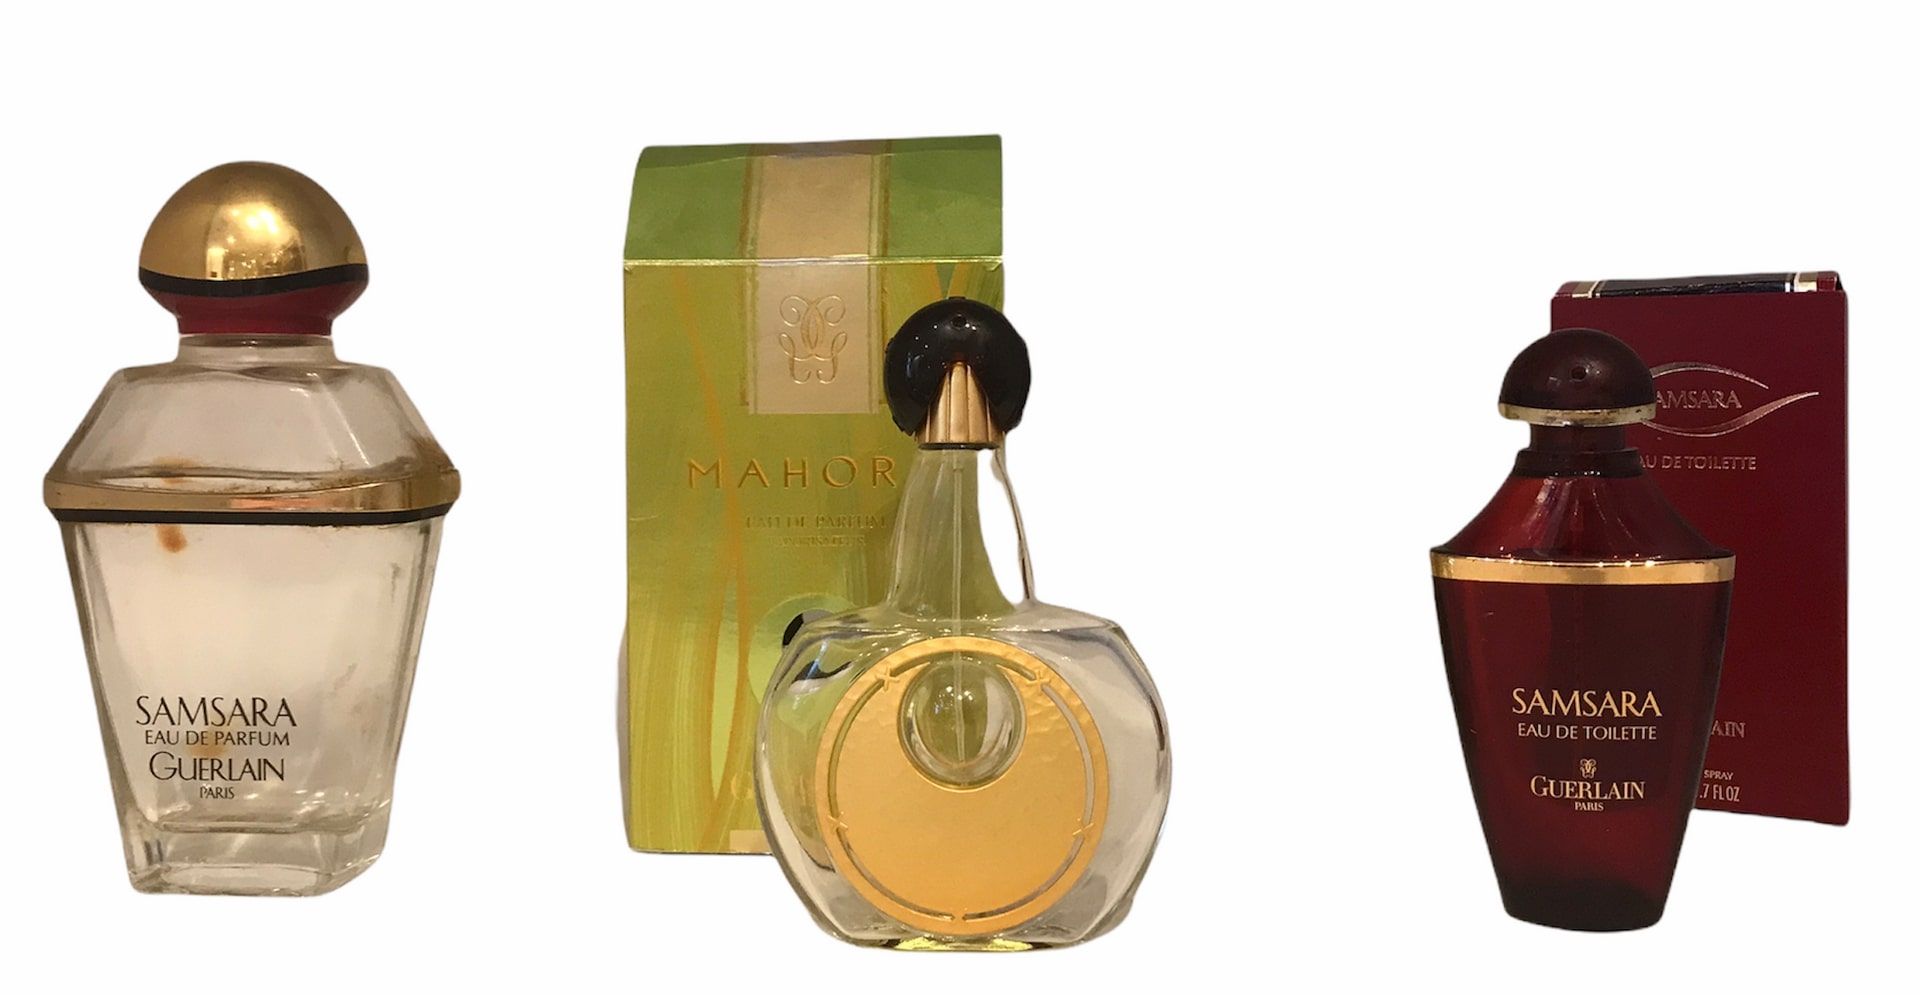 Null 顾尔伦

一套3瓶的 "Mahora"，"Samsara"。

"Mahora"，淡香水，玻璃瓶包装。

"Samsara"，淡香水，玻璃瓶装

"S&hellip;